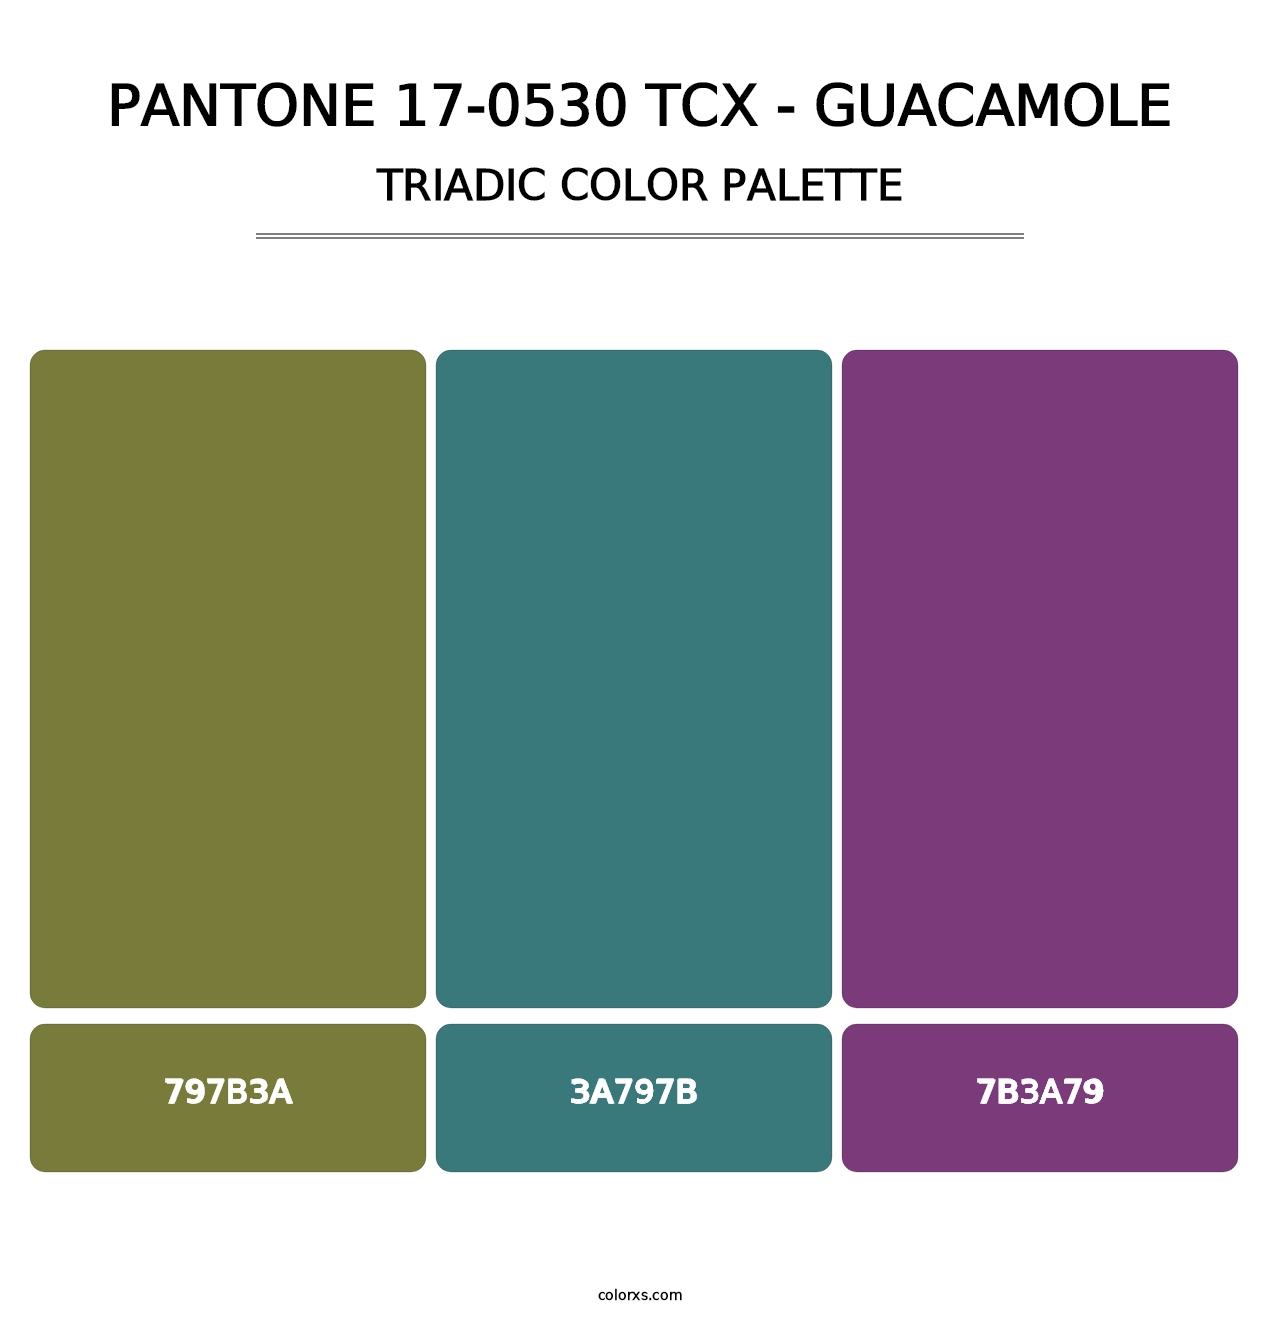 PANTONE 17-0530 TCX - Guacamole - Triadic Color Palette